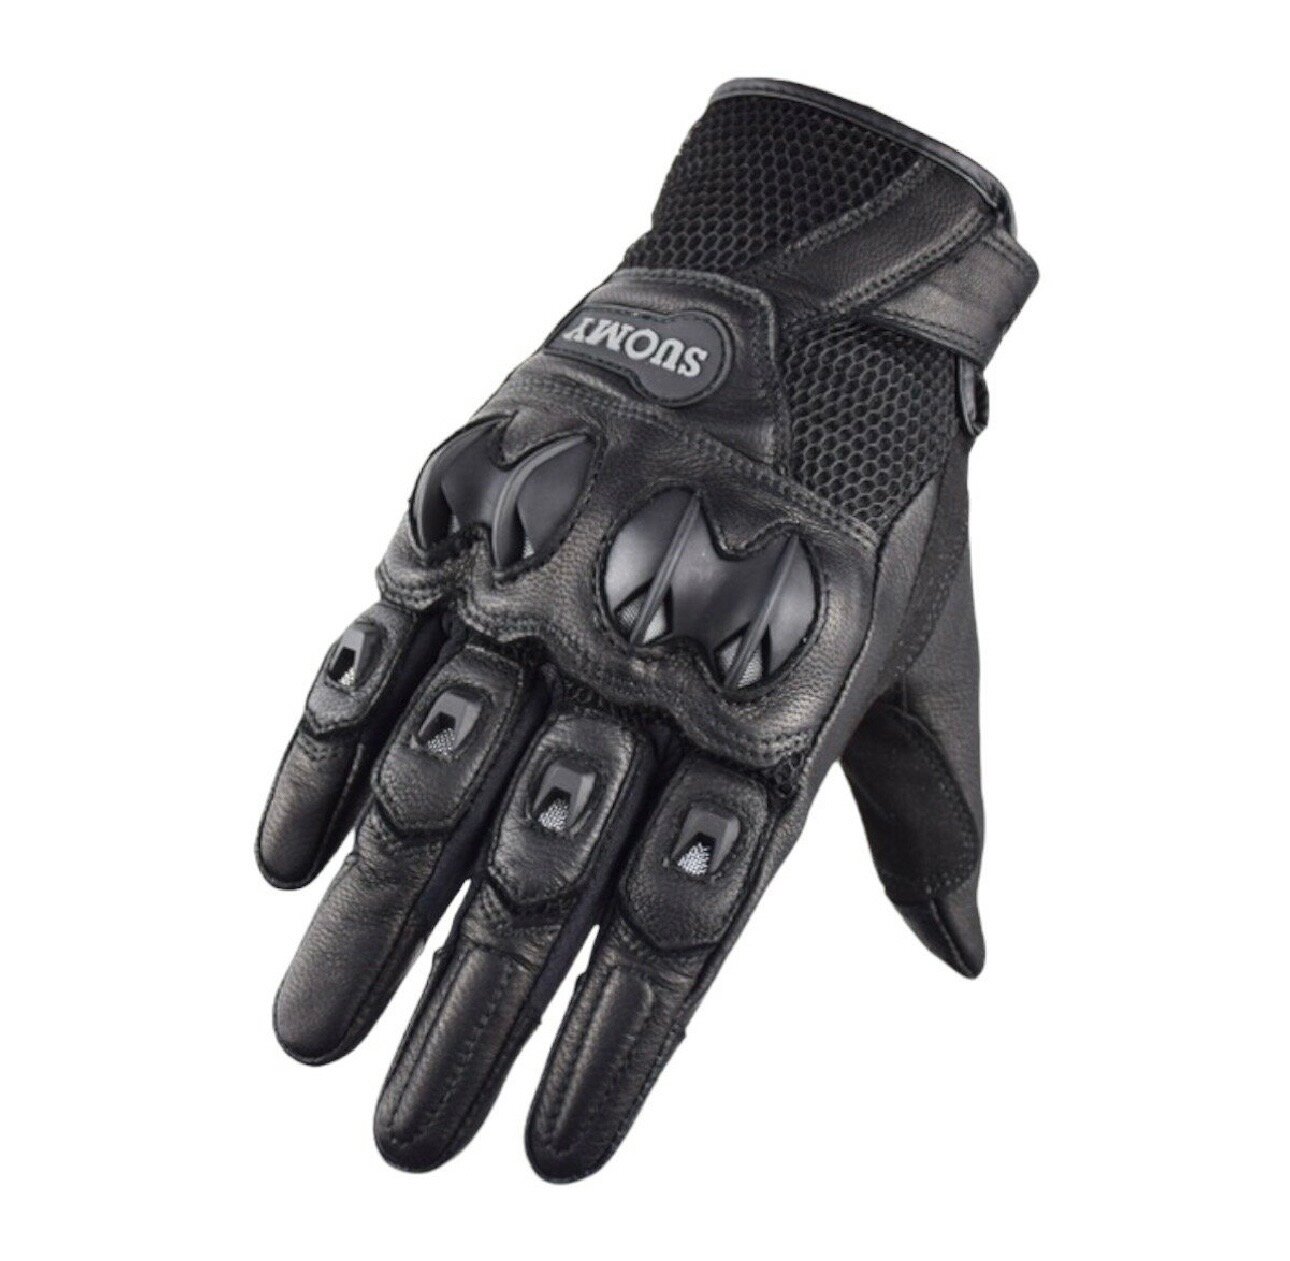 Мотоперчатки перчатки кожаные Suomy SU-15 для мотоциклиста на мотоцикл скутер мопед квадроцикл черные XXL